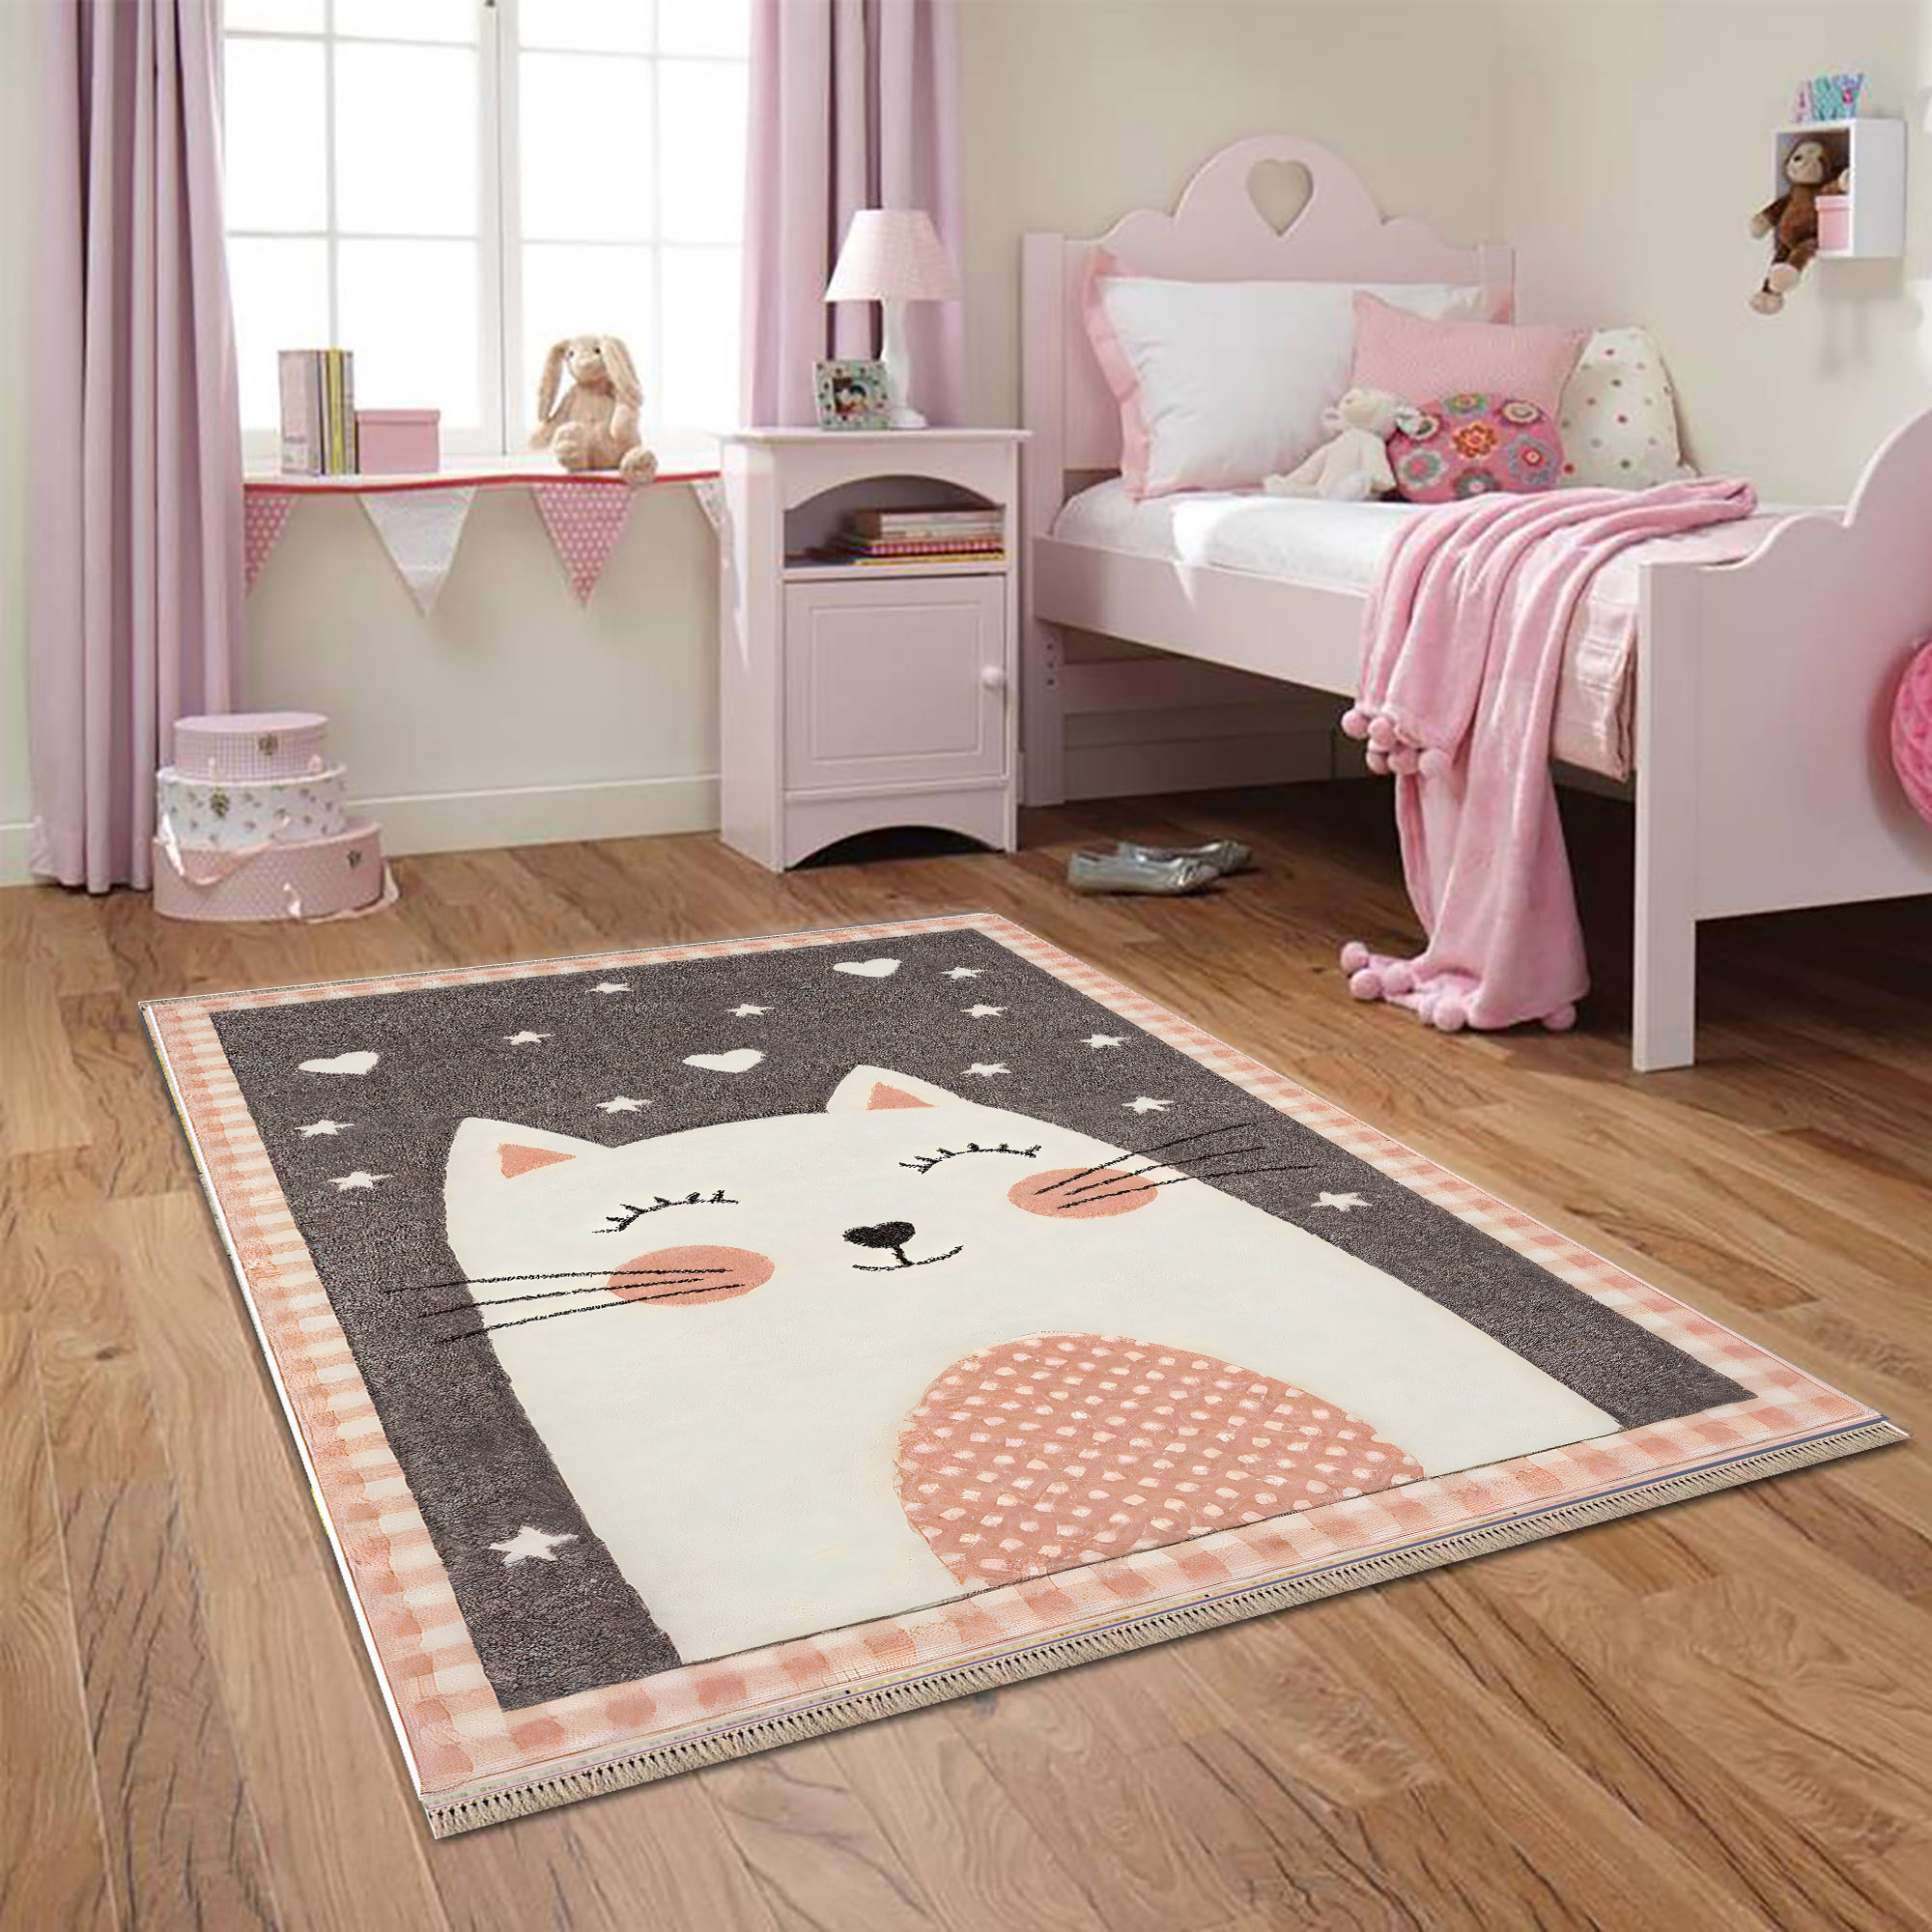 فرش ماشینی مدل ترمزدار کد A436 طرح اتاق کودک